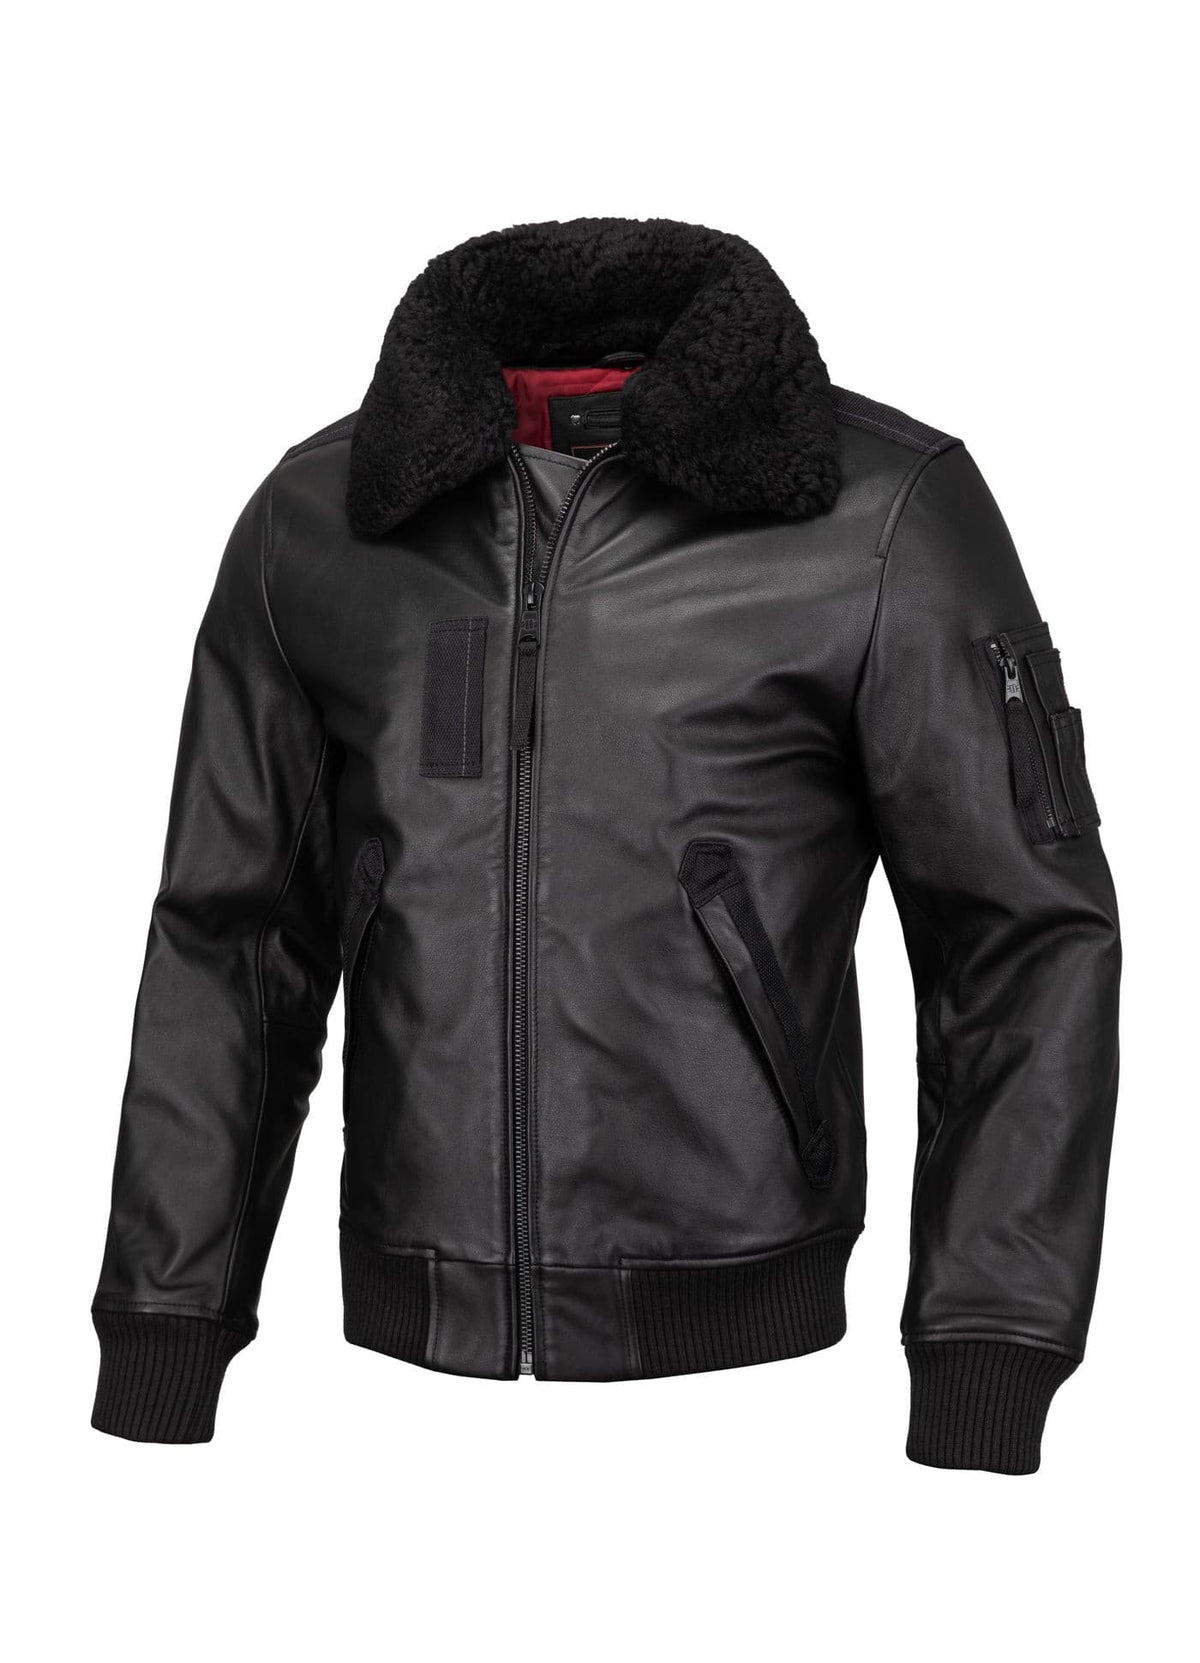 BRANDO Black Leather Jacket.